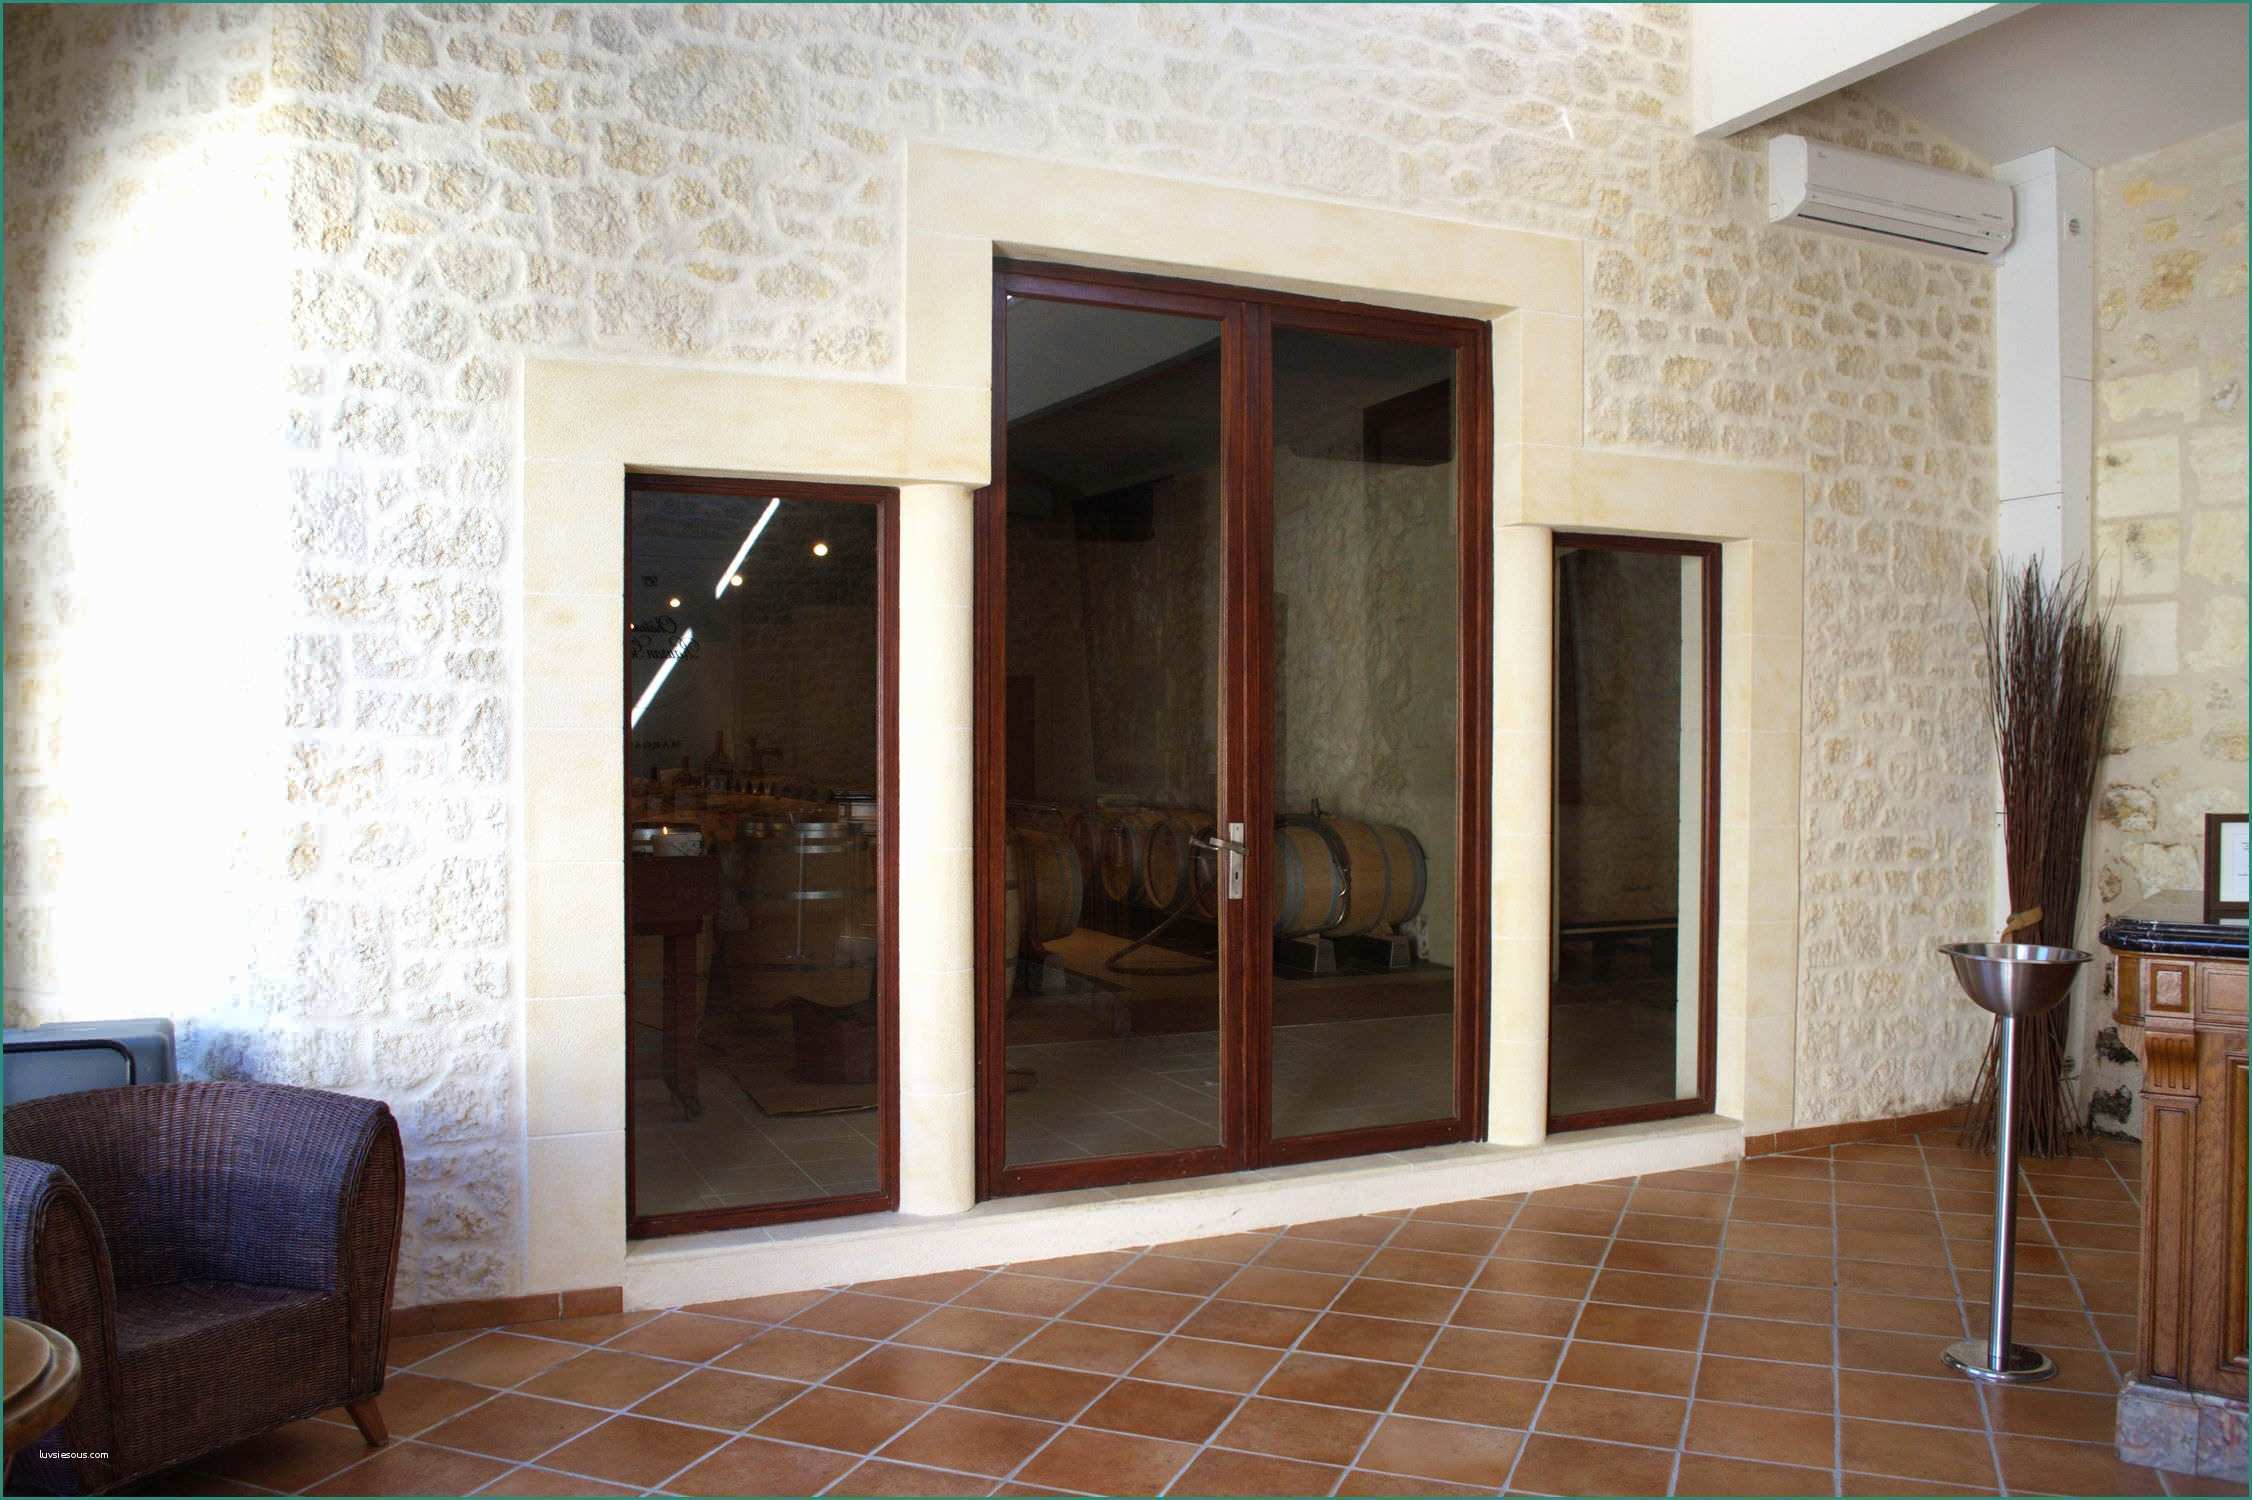 Pannelli polistirolo soffitto leroy merlin e pannelli per for Pannelli decorativi in polistirolo pareti interne